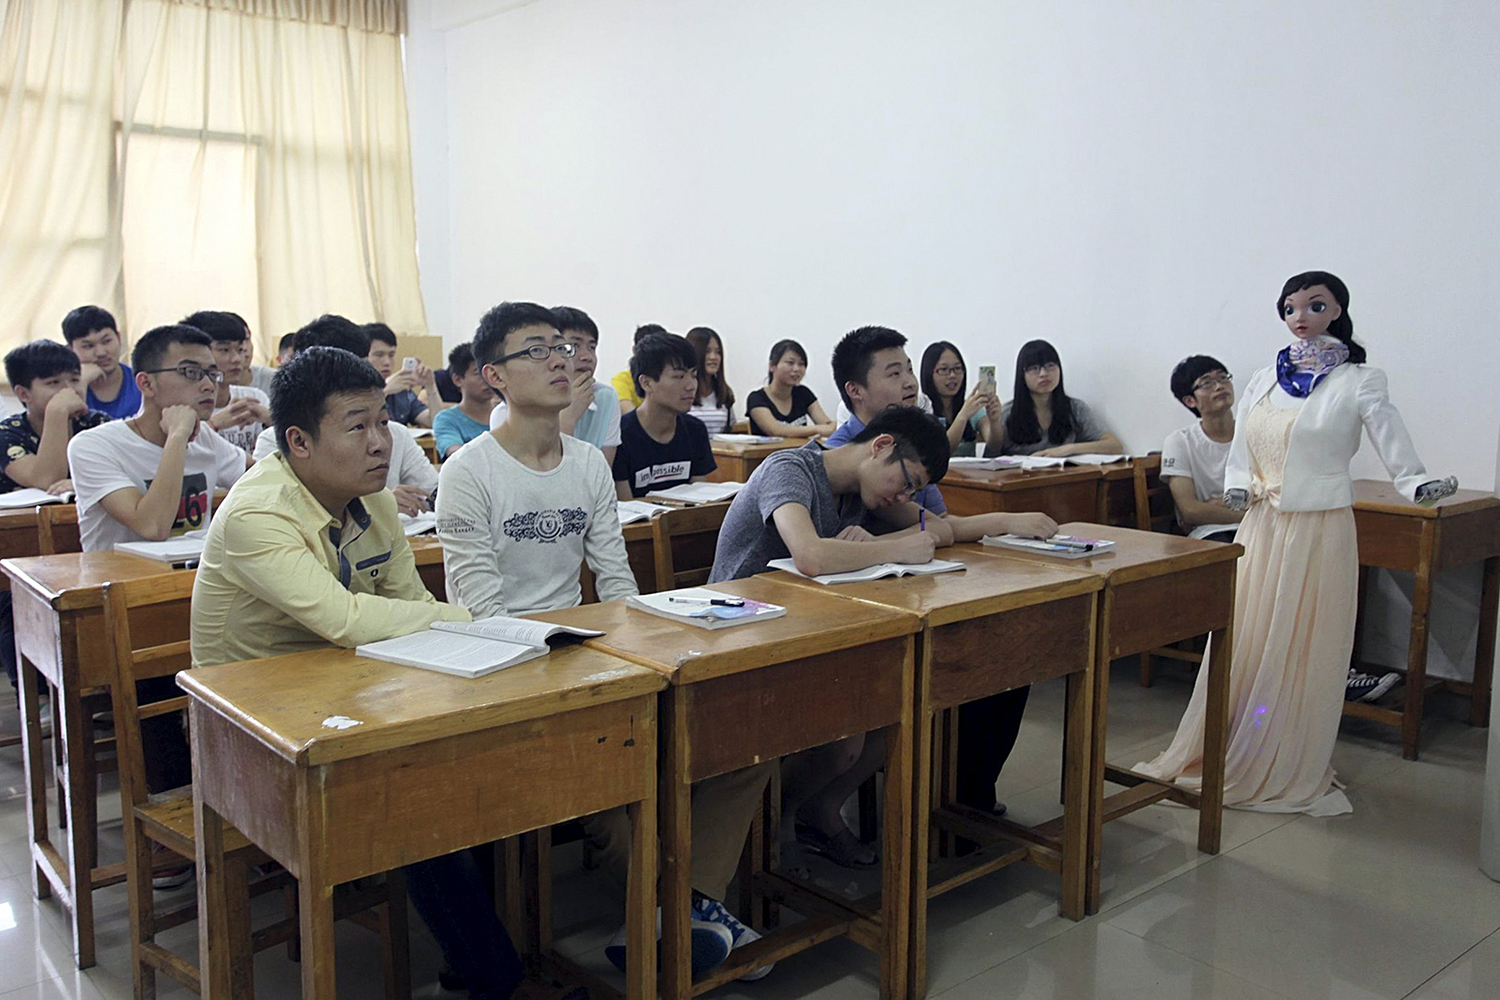 Un robot imparte clases en la Universidad Jiujiang